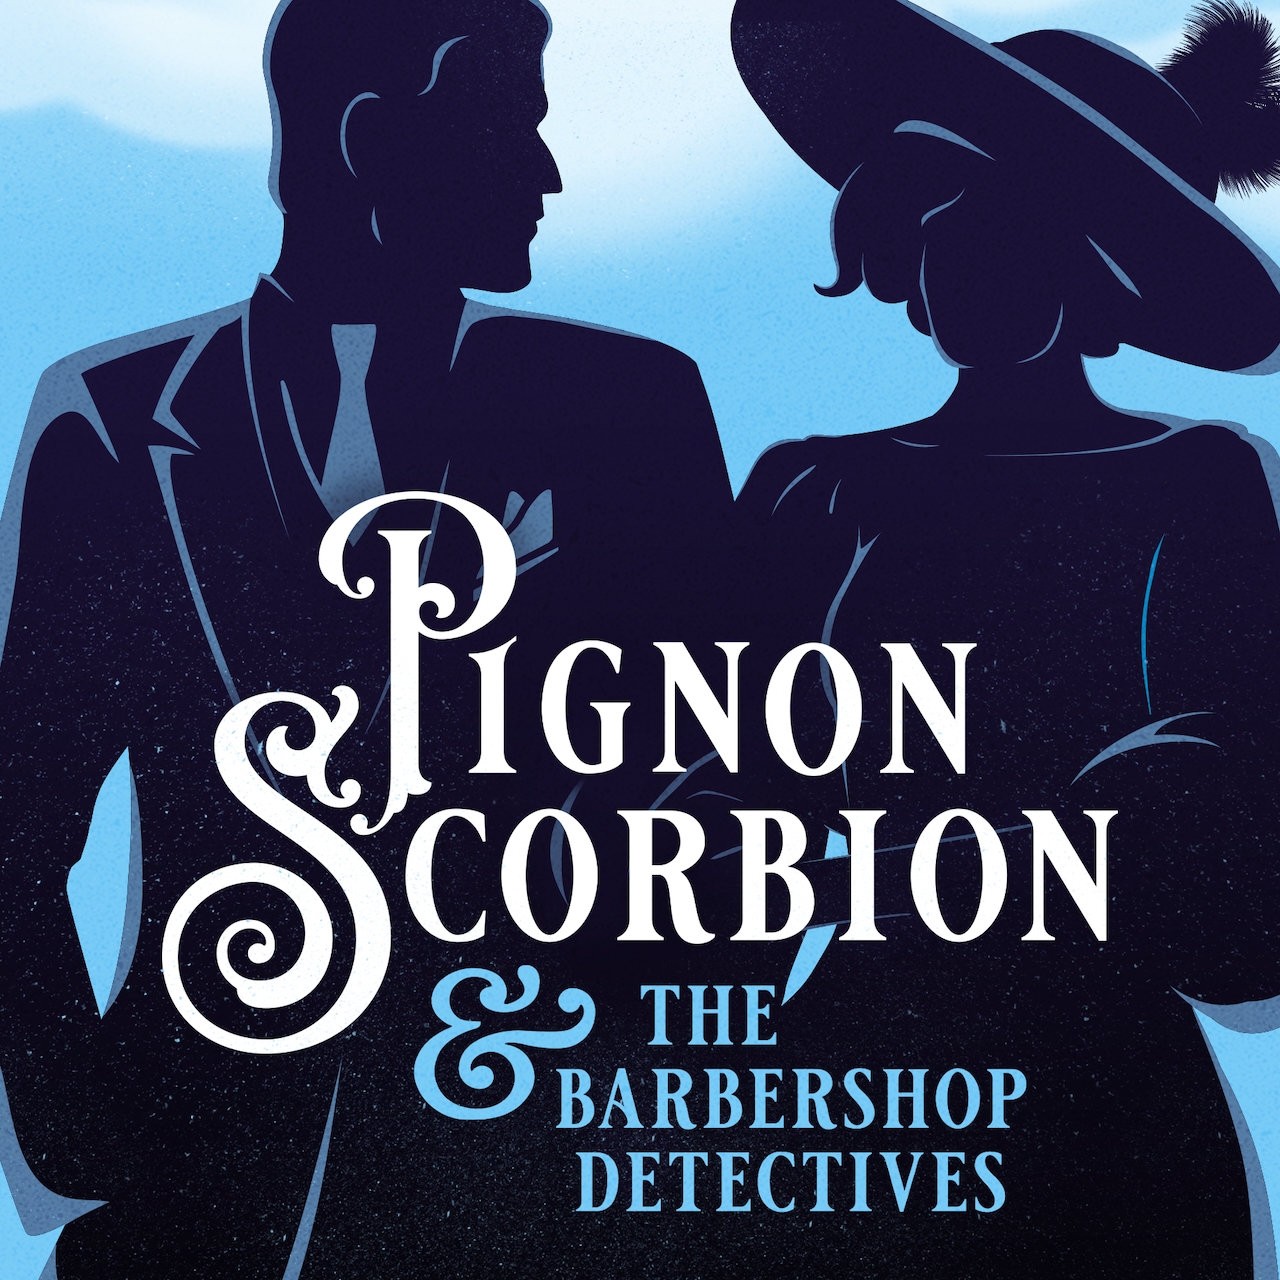 Pignon Scorbion & The Barbershop Detectives (Blackstone Publishing, Feb 8, 2022) features romance between Police Chief Inspector Pignon Scorbion and Thelma Smith, a smart & attractive bookshop owner.